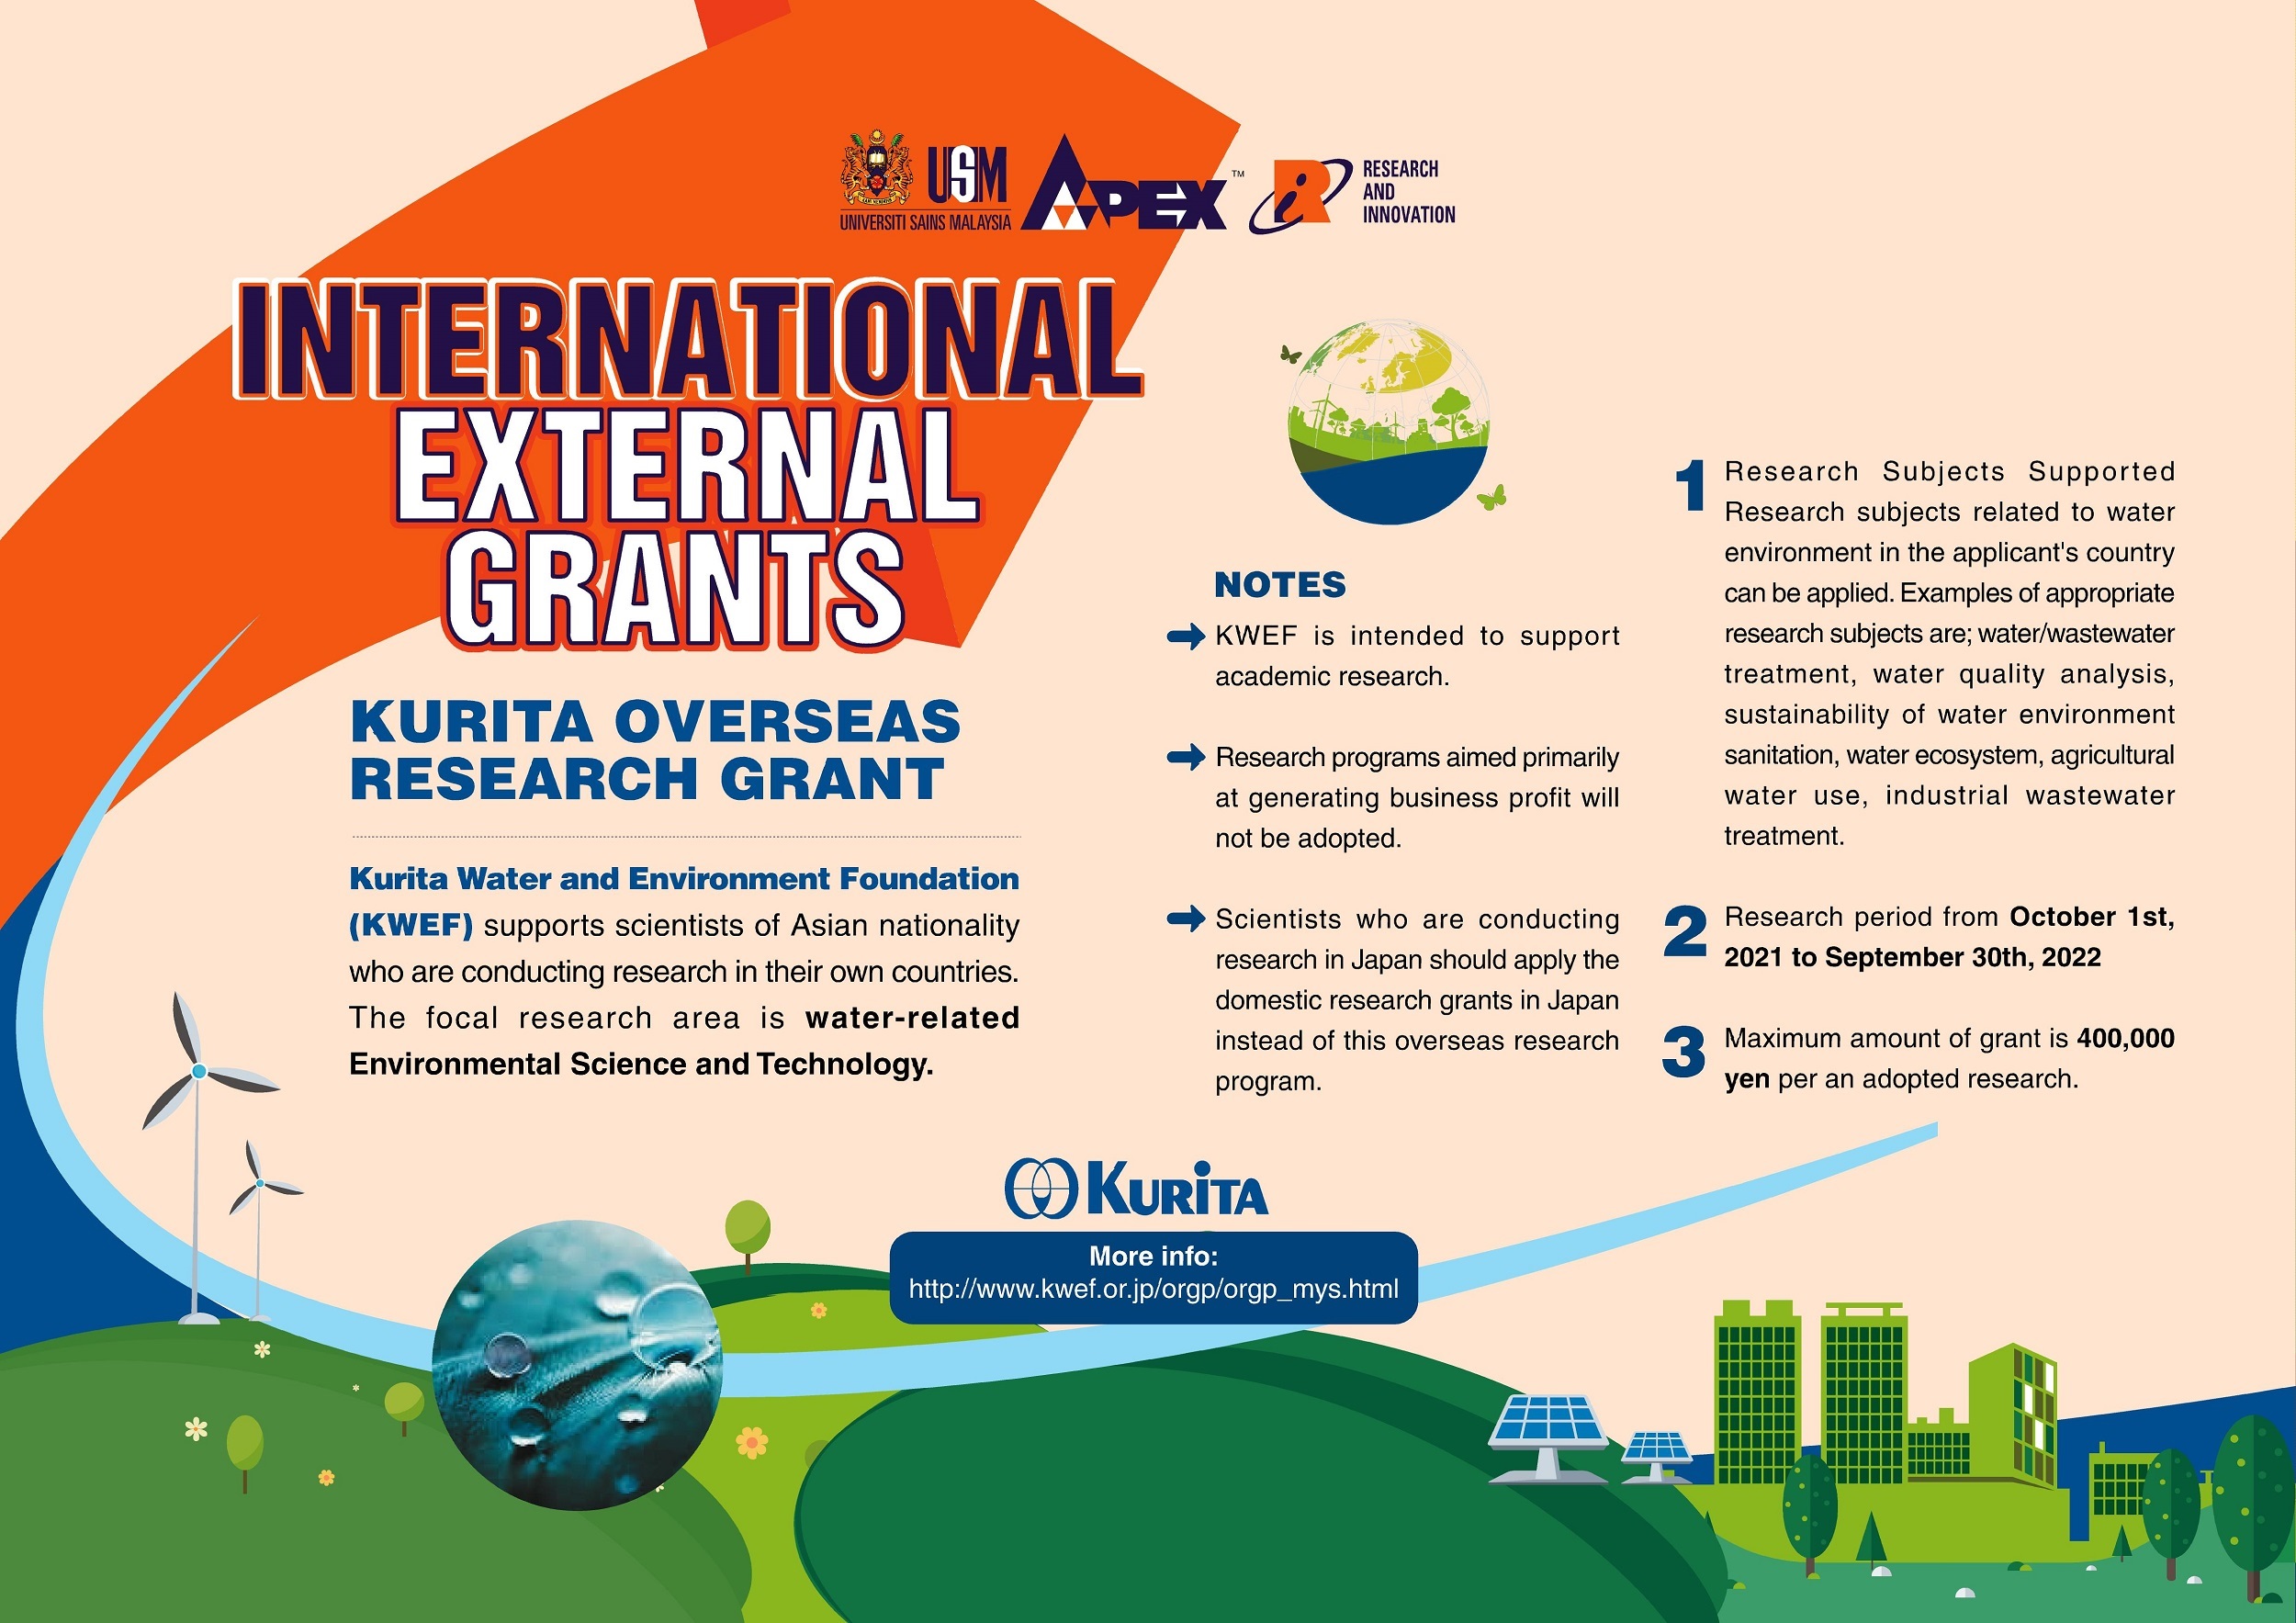 Poster External Grants International KURITA edited